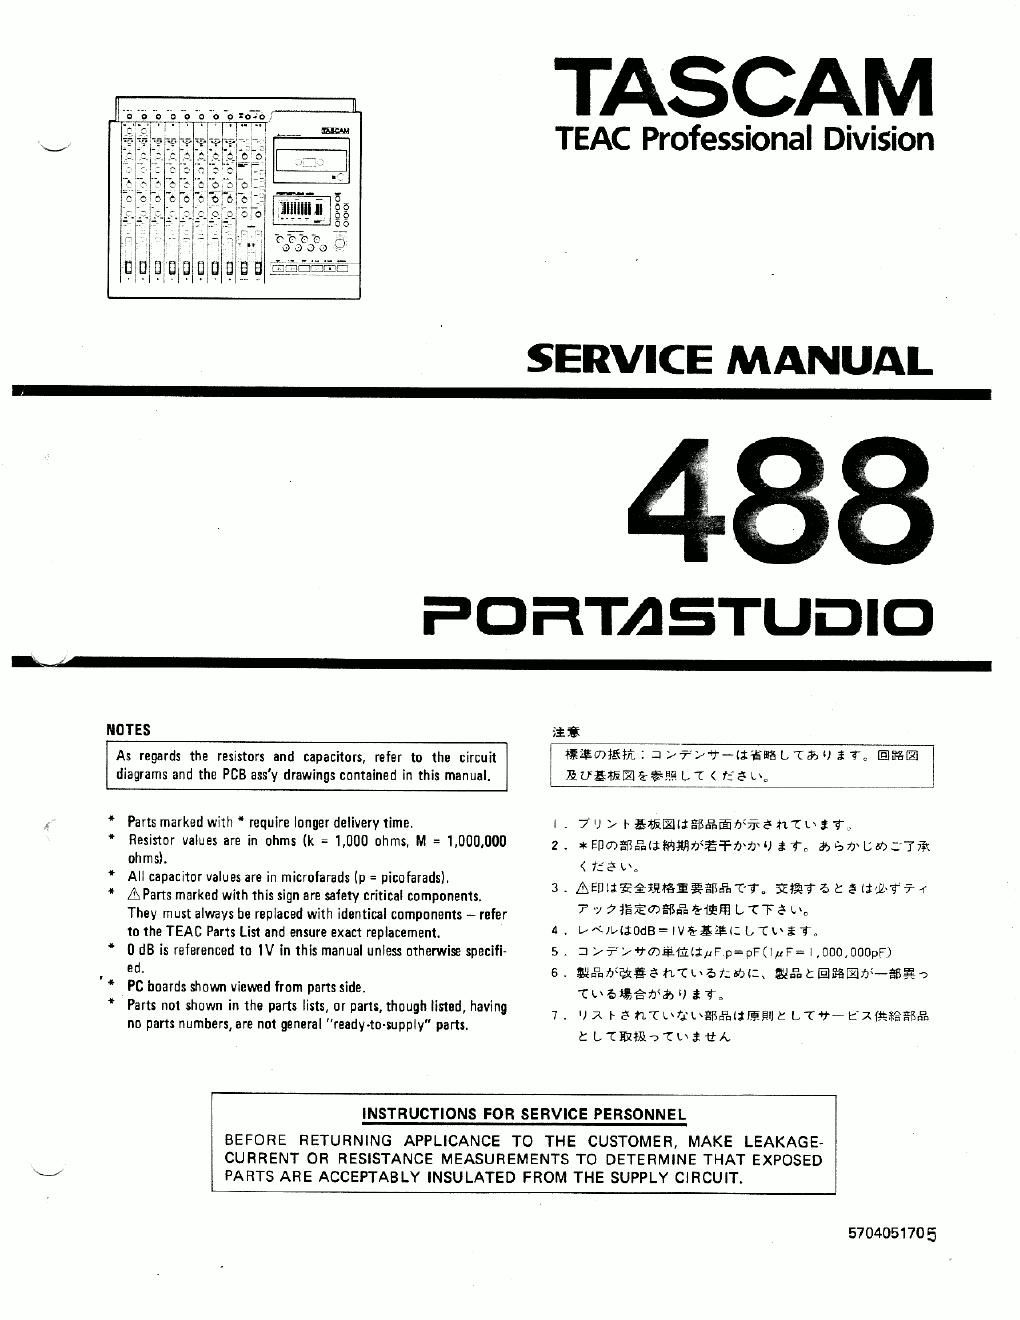 Tascam 488 Portastudio Service Manual